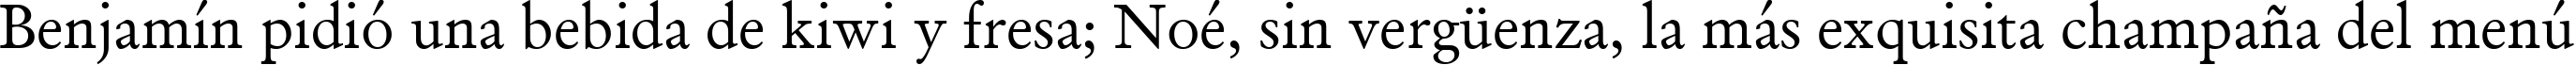 Пример написания шрифтом Garamond Antiqua текста на испанском